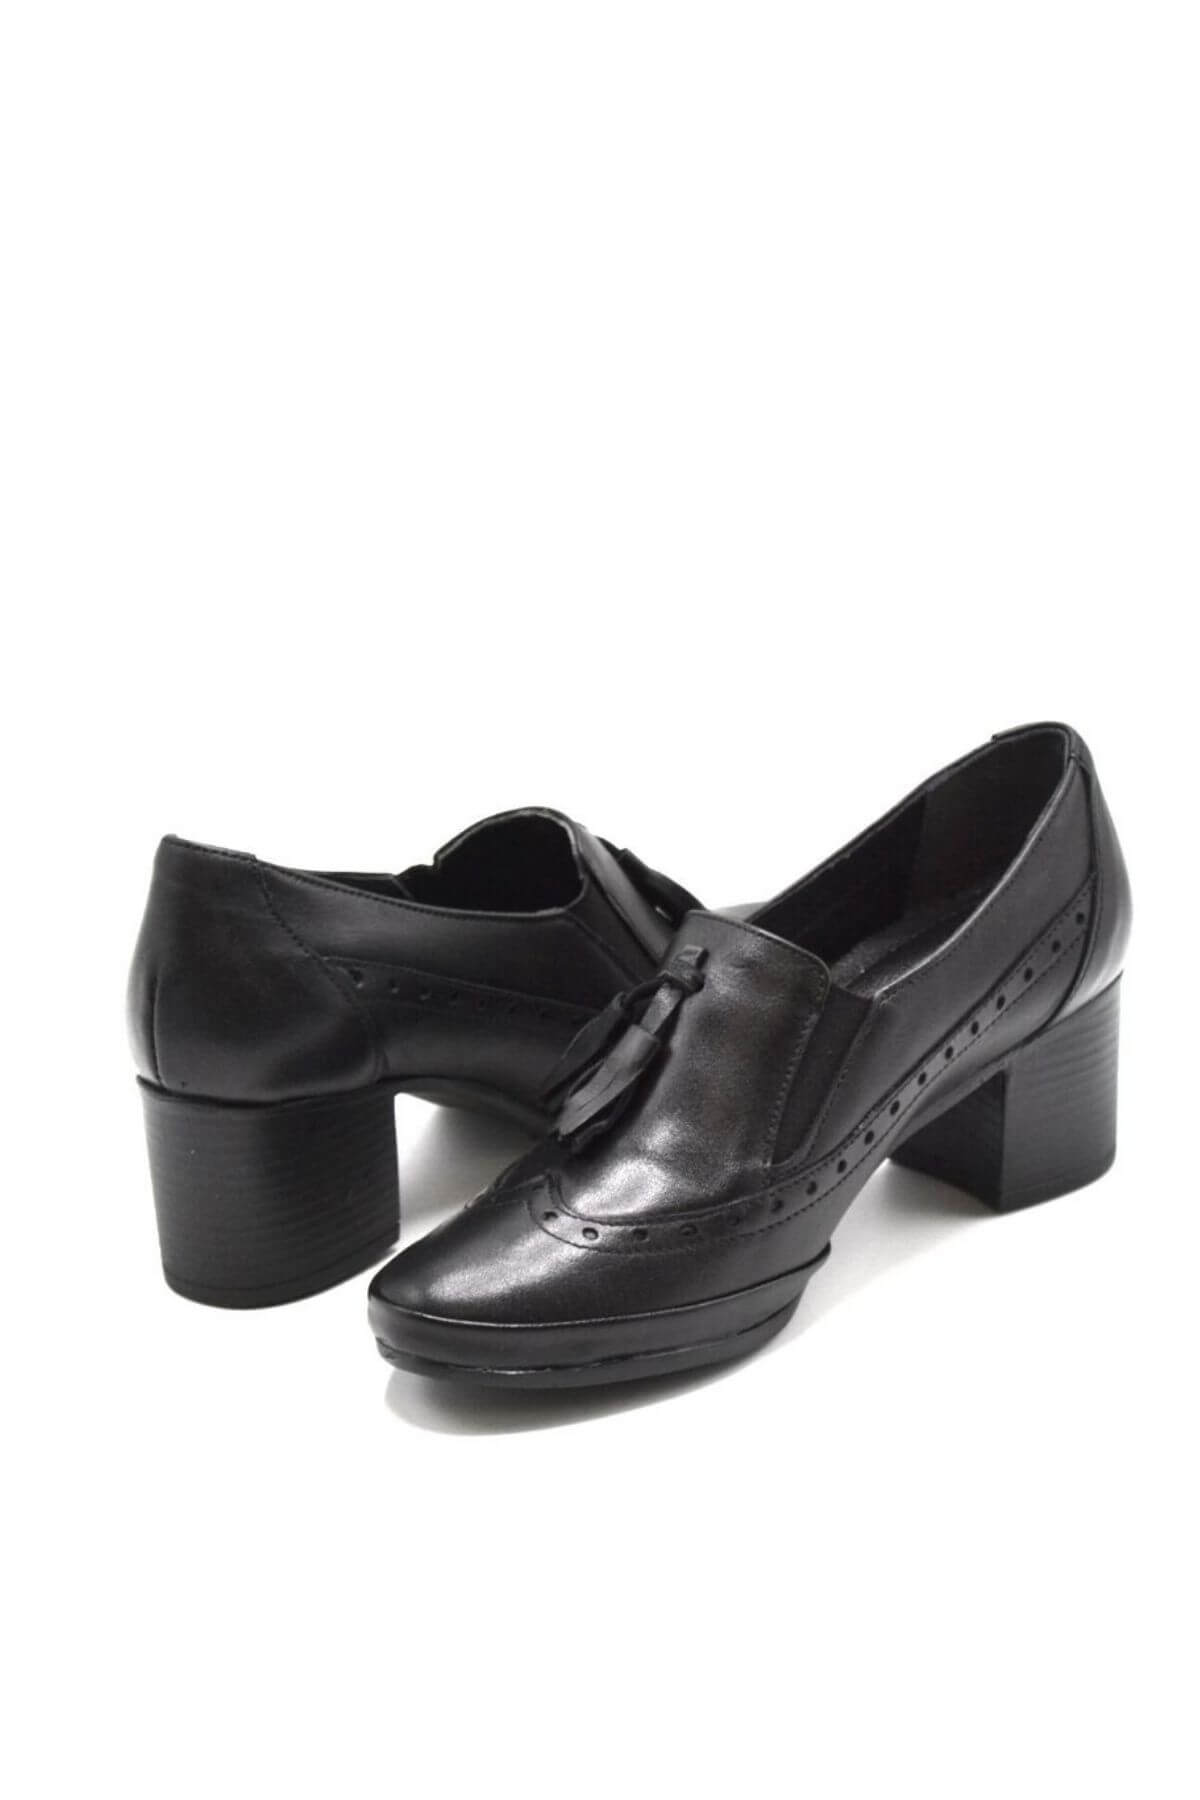 Kadın Topuklu Deri Ayakkabı Siyah 1911943K - Thumbnail